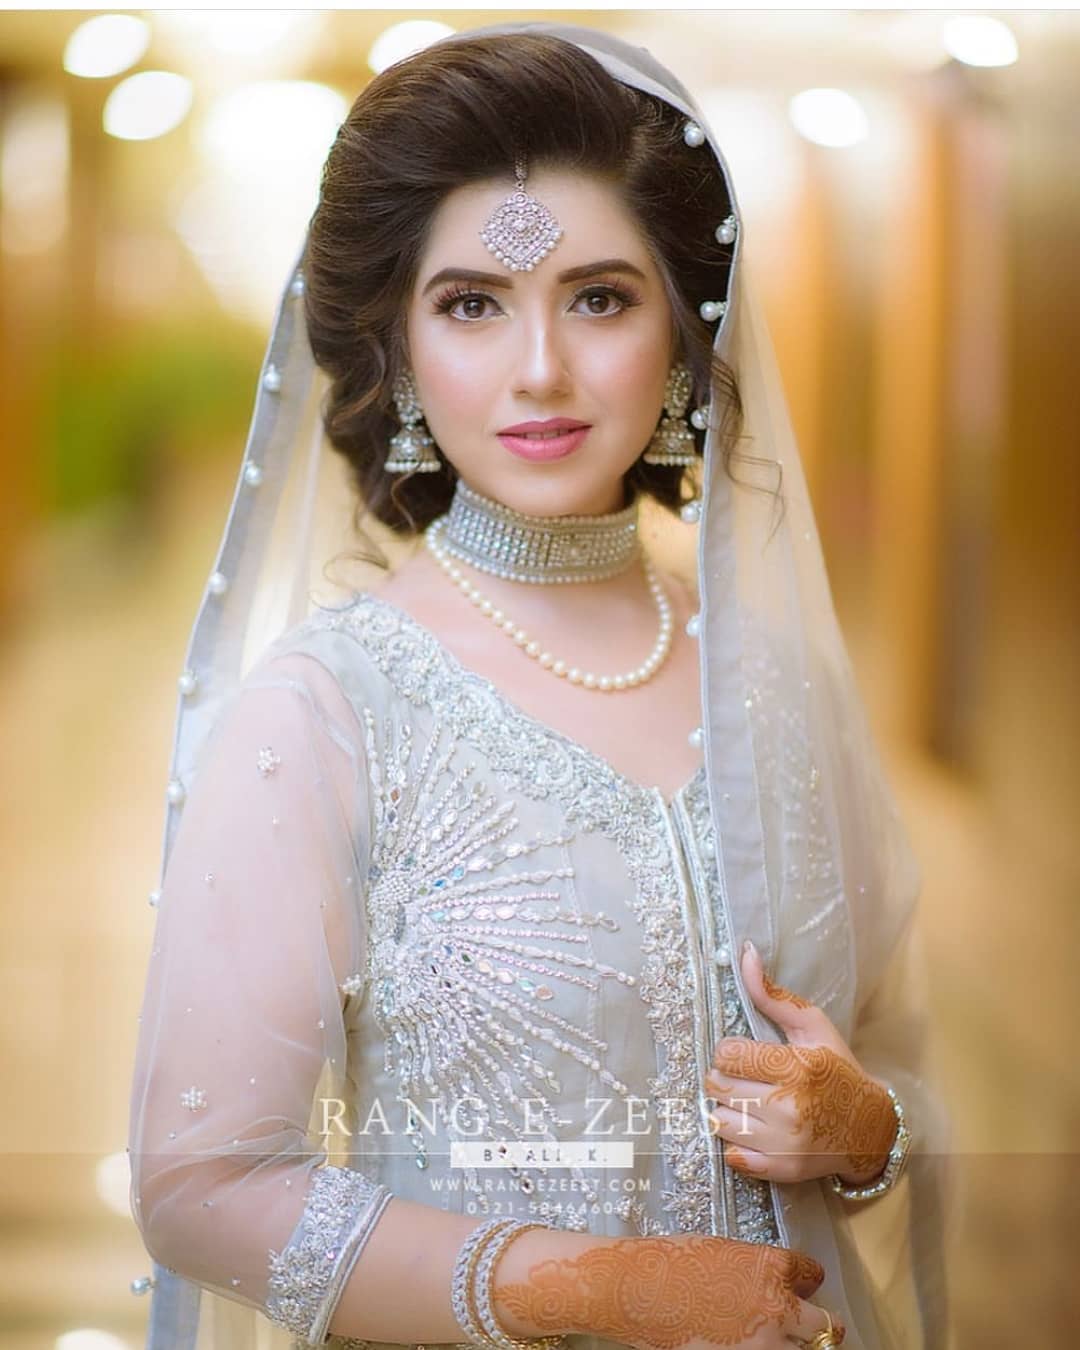 Pakistani Brides Giving Major Bridal Hairstyle Goals